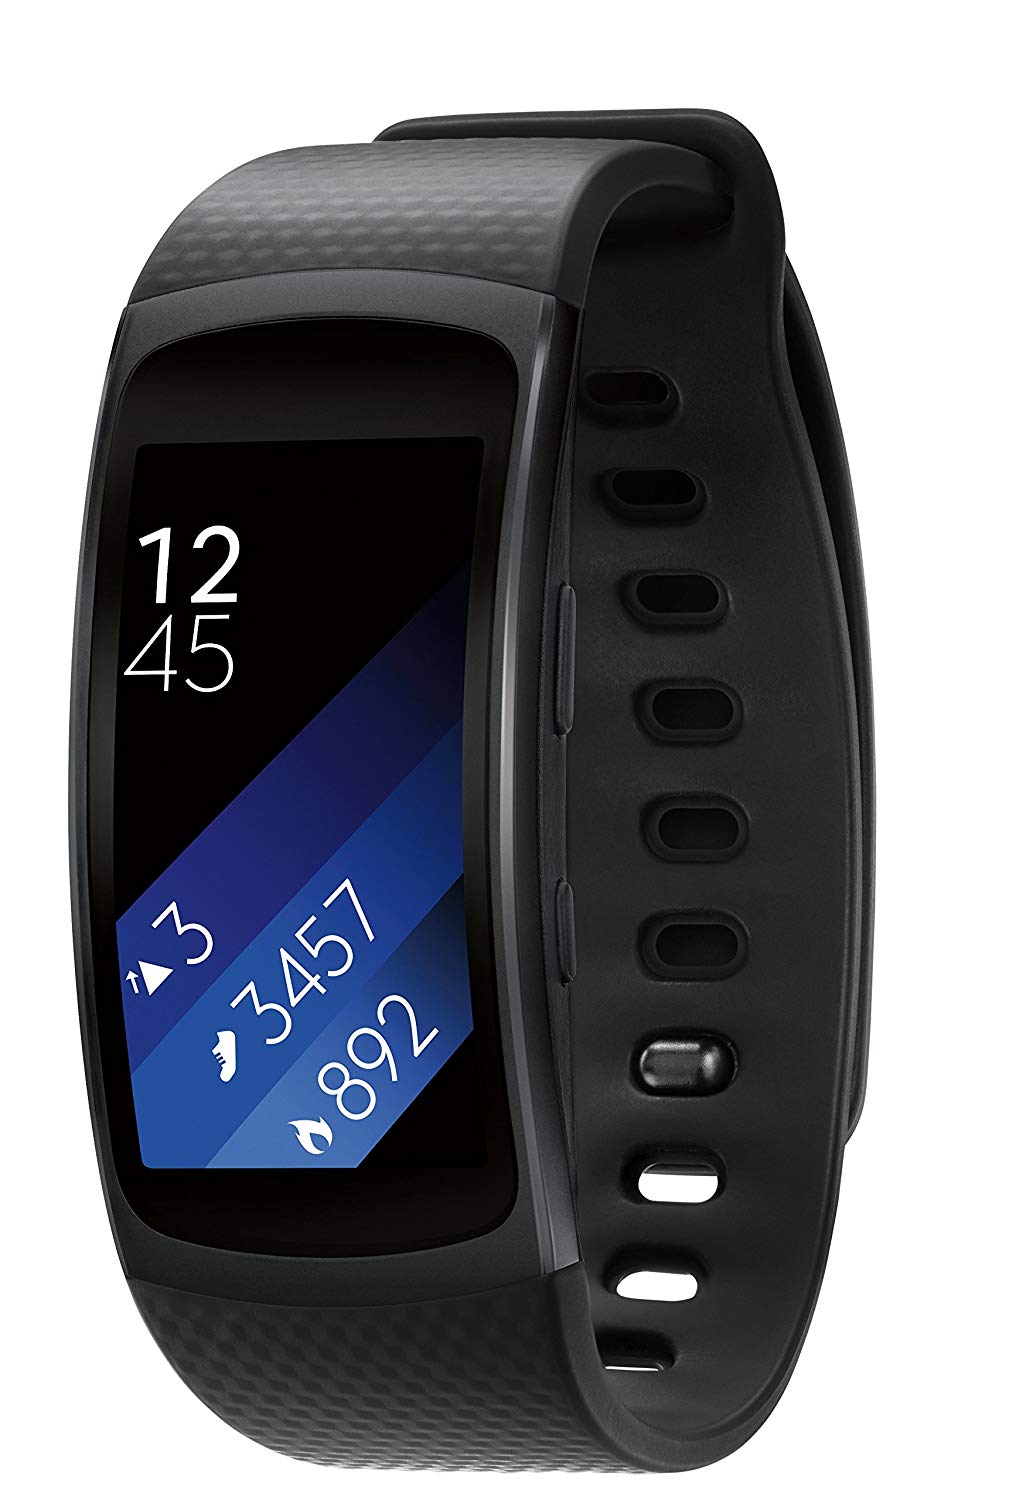 Samsung Gear Fit2 Smartwatch Large, Black | Leversage